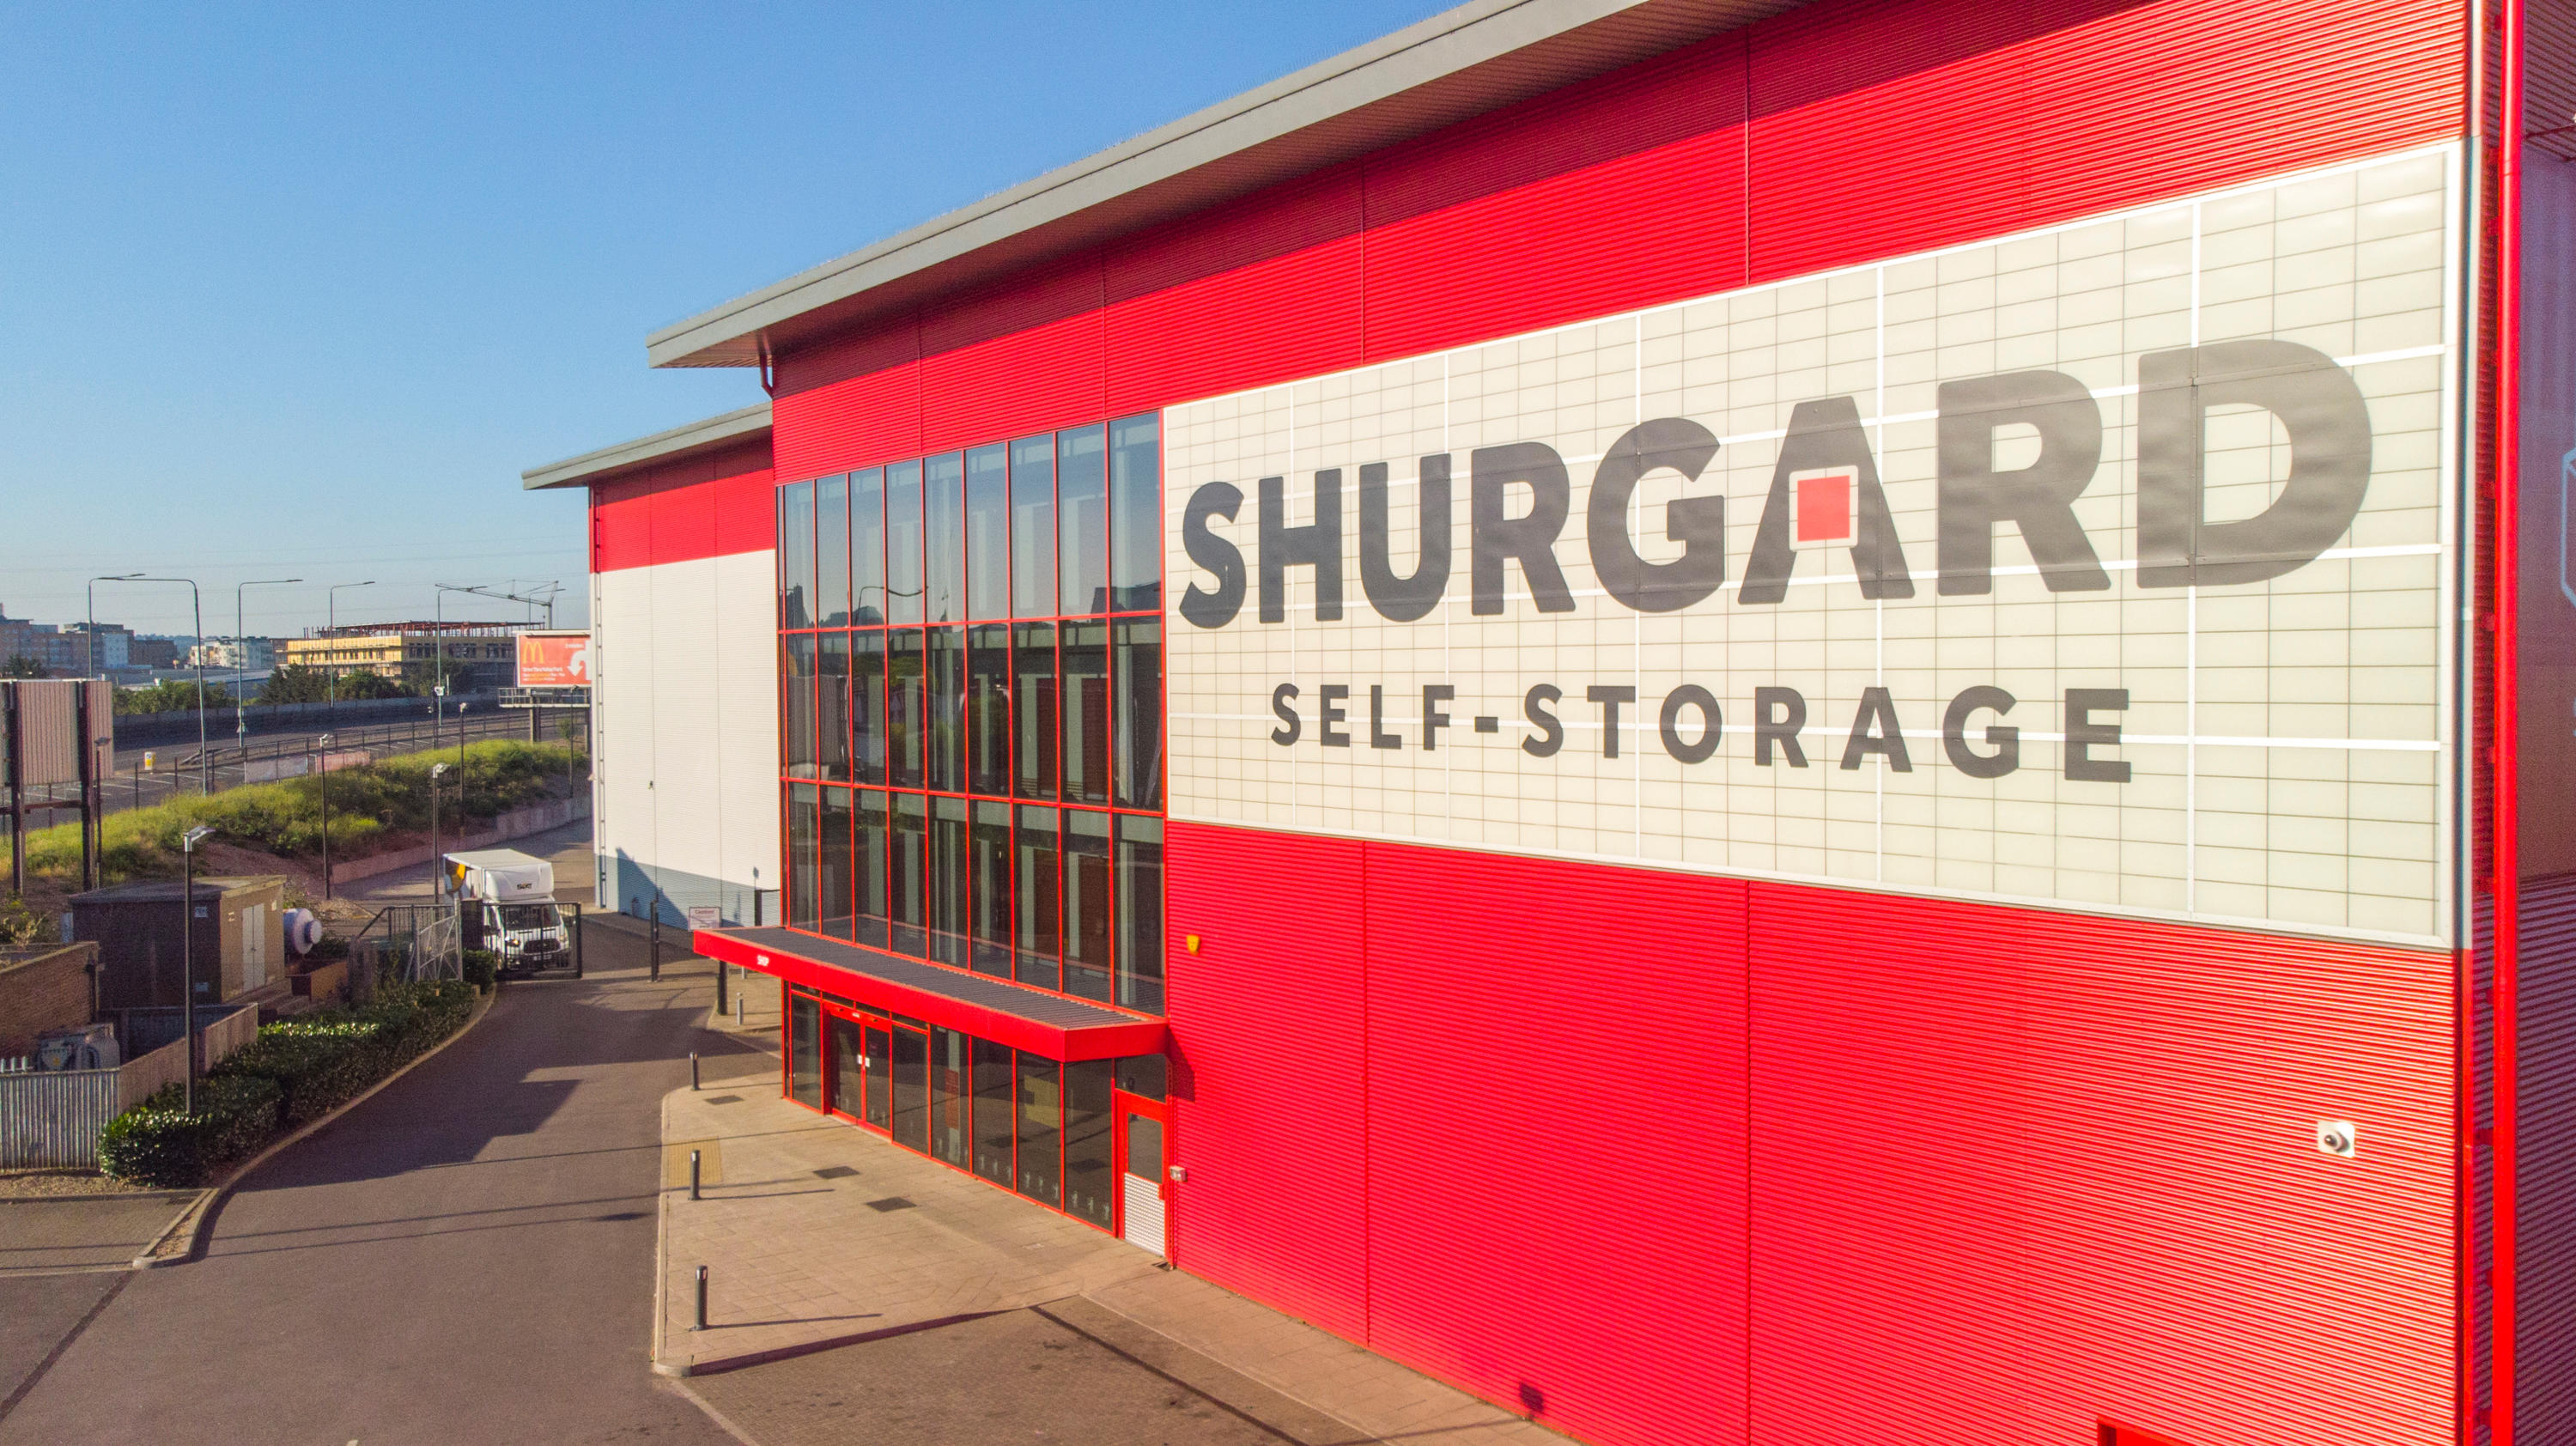 Shurgard Self Storage Croydon Purley Way Croydon 020 8618 1000